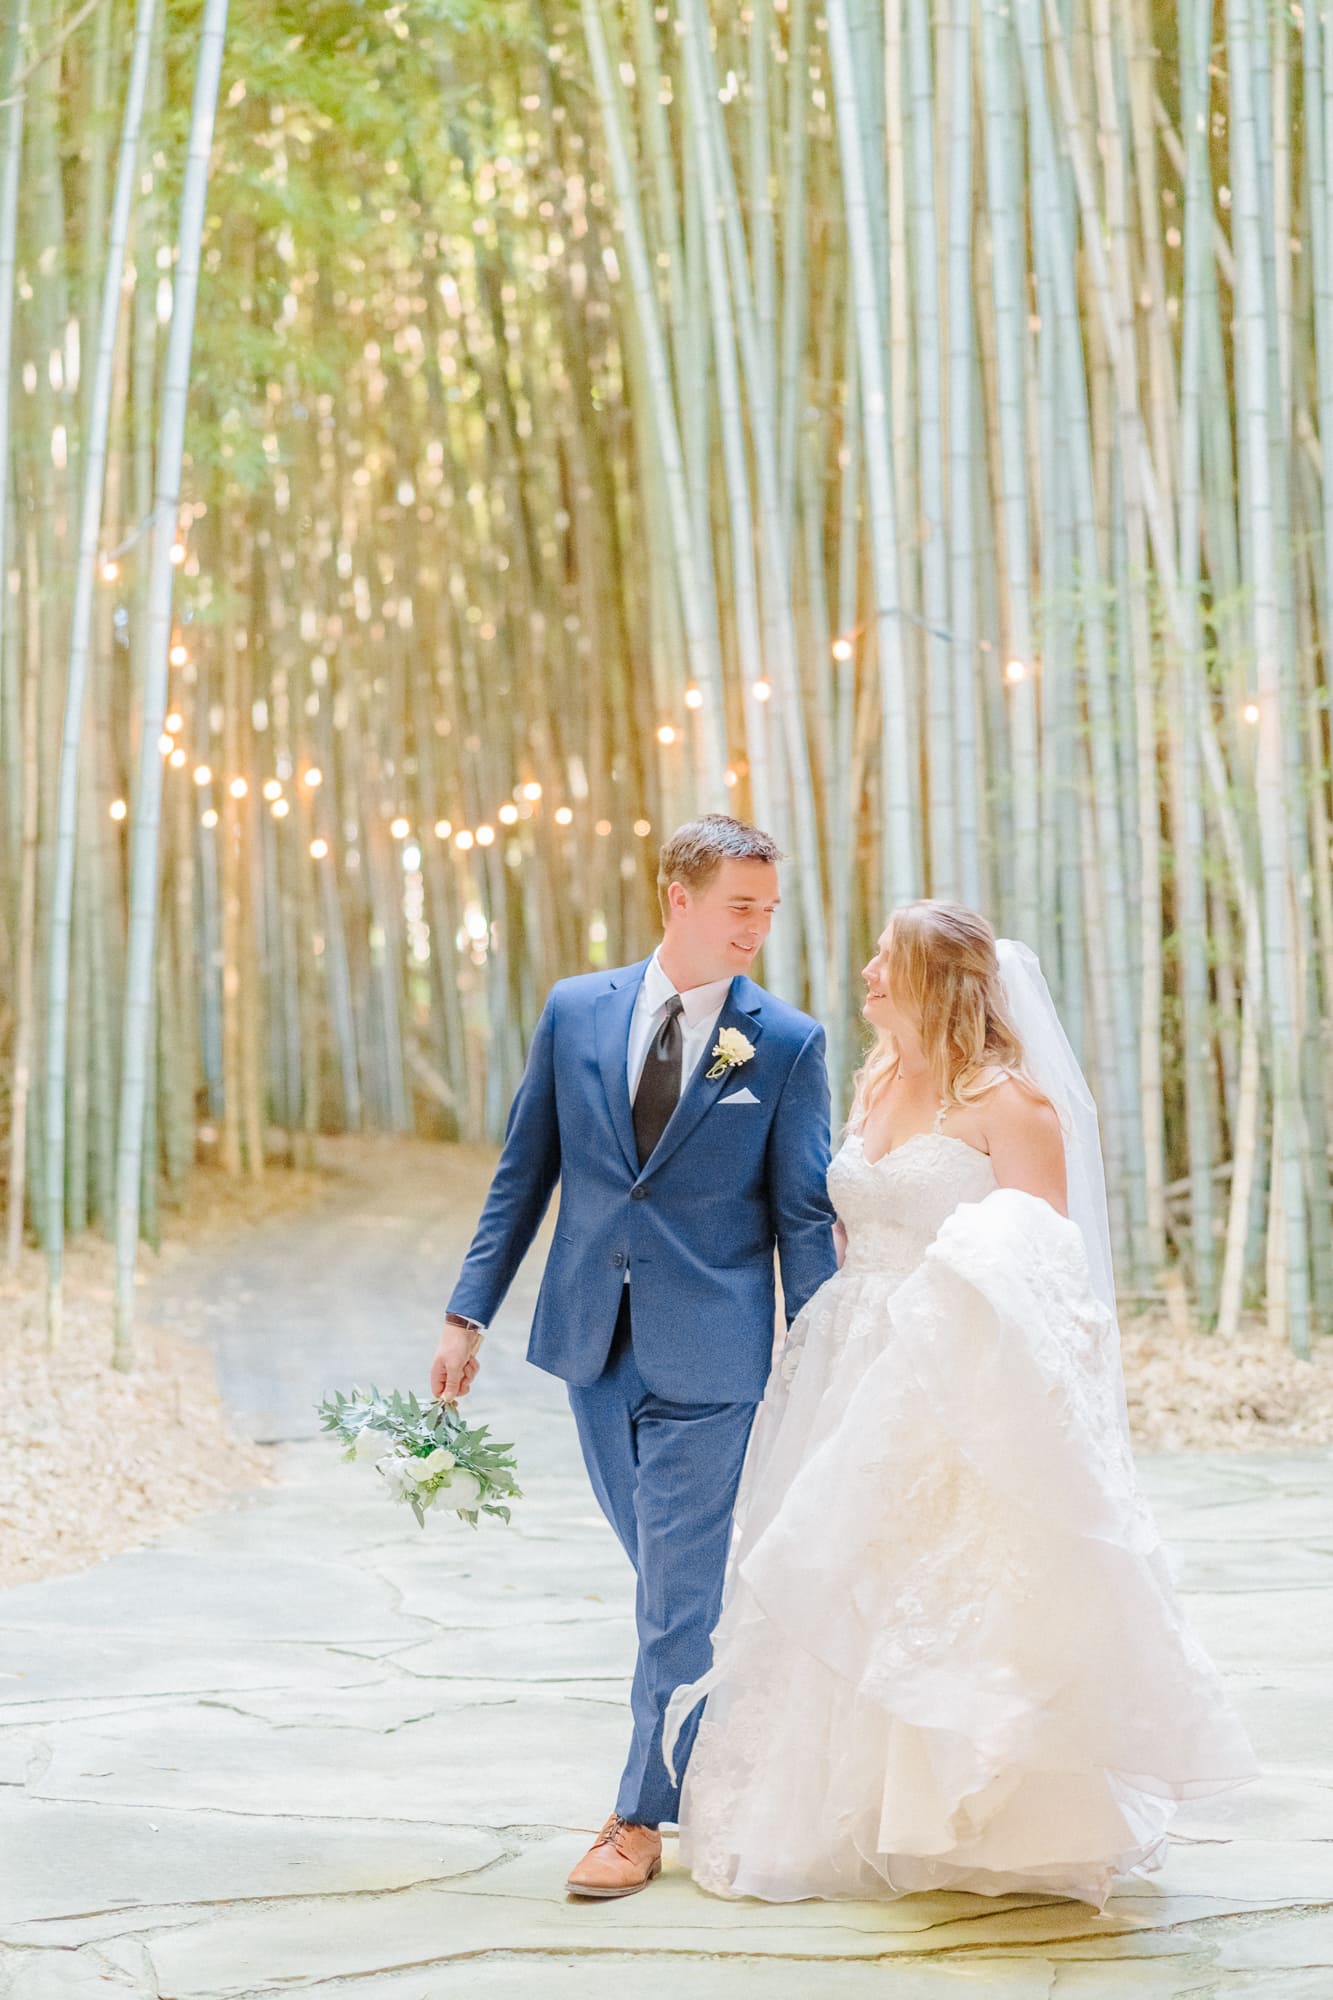 The bride and groom walk through the forest near their barn wedding venue.